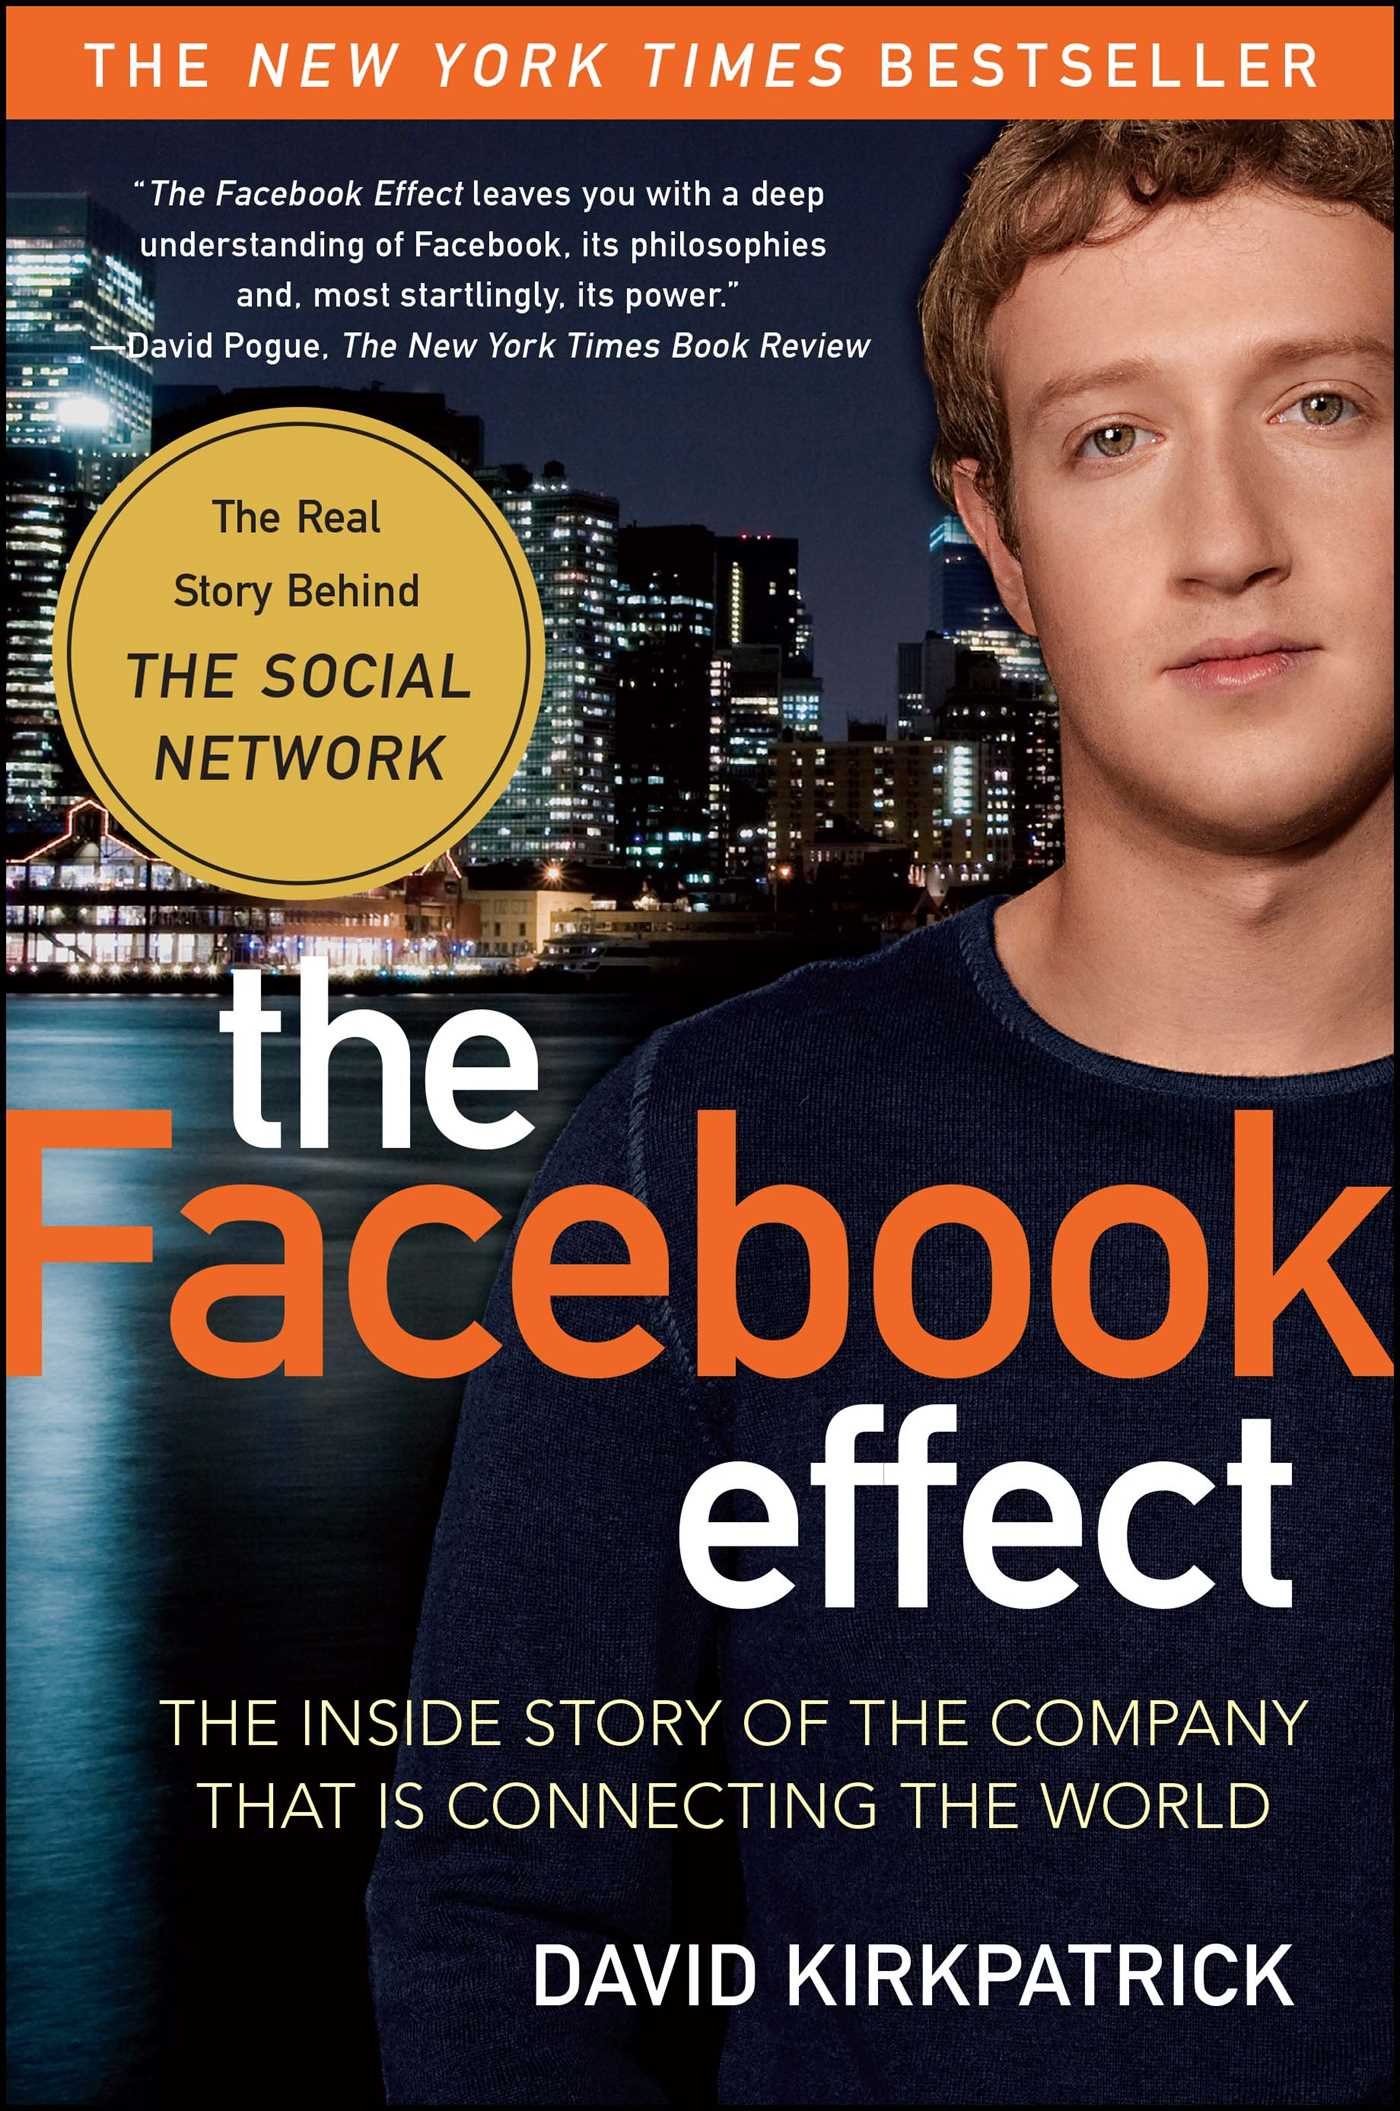 The Facebook Effect Summary